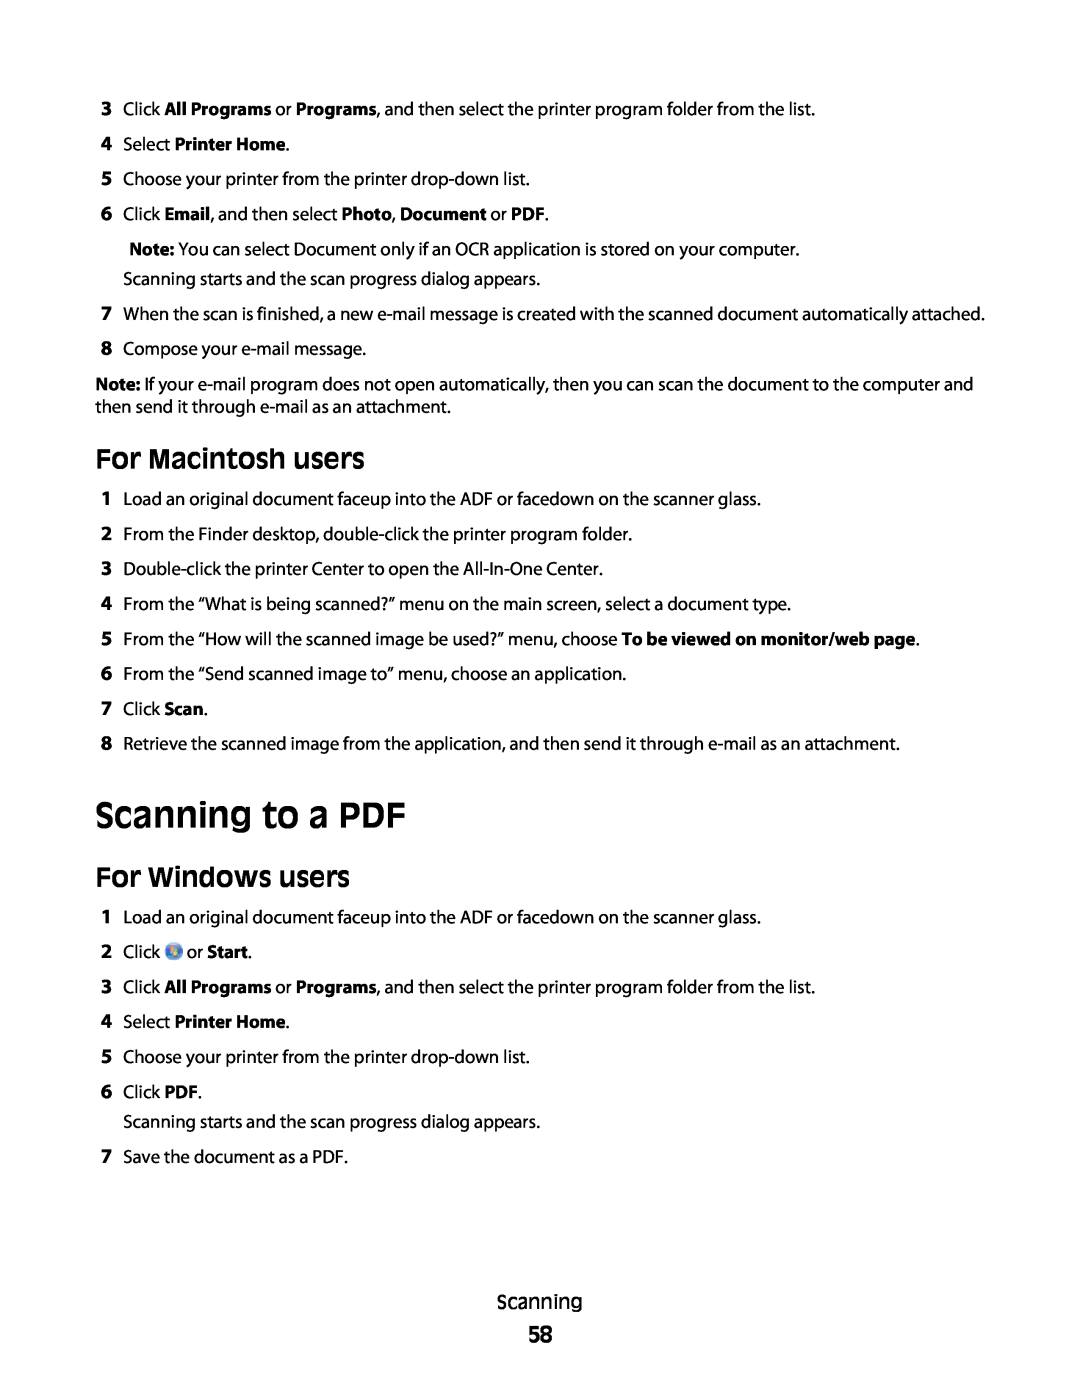 Lexmark 101, 10E manual For Macintosh users, For Windows users, 4Select Printer Home 